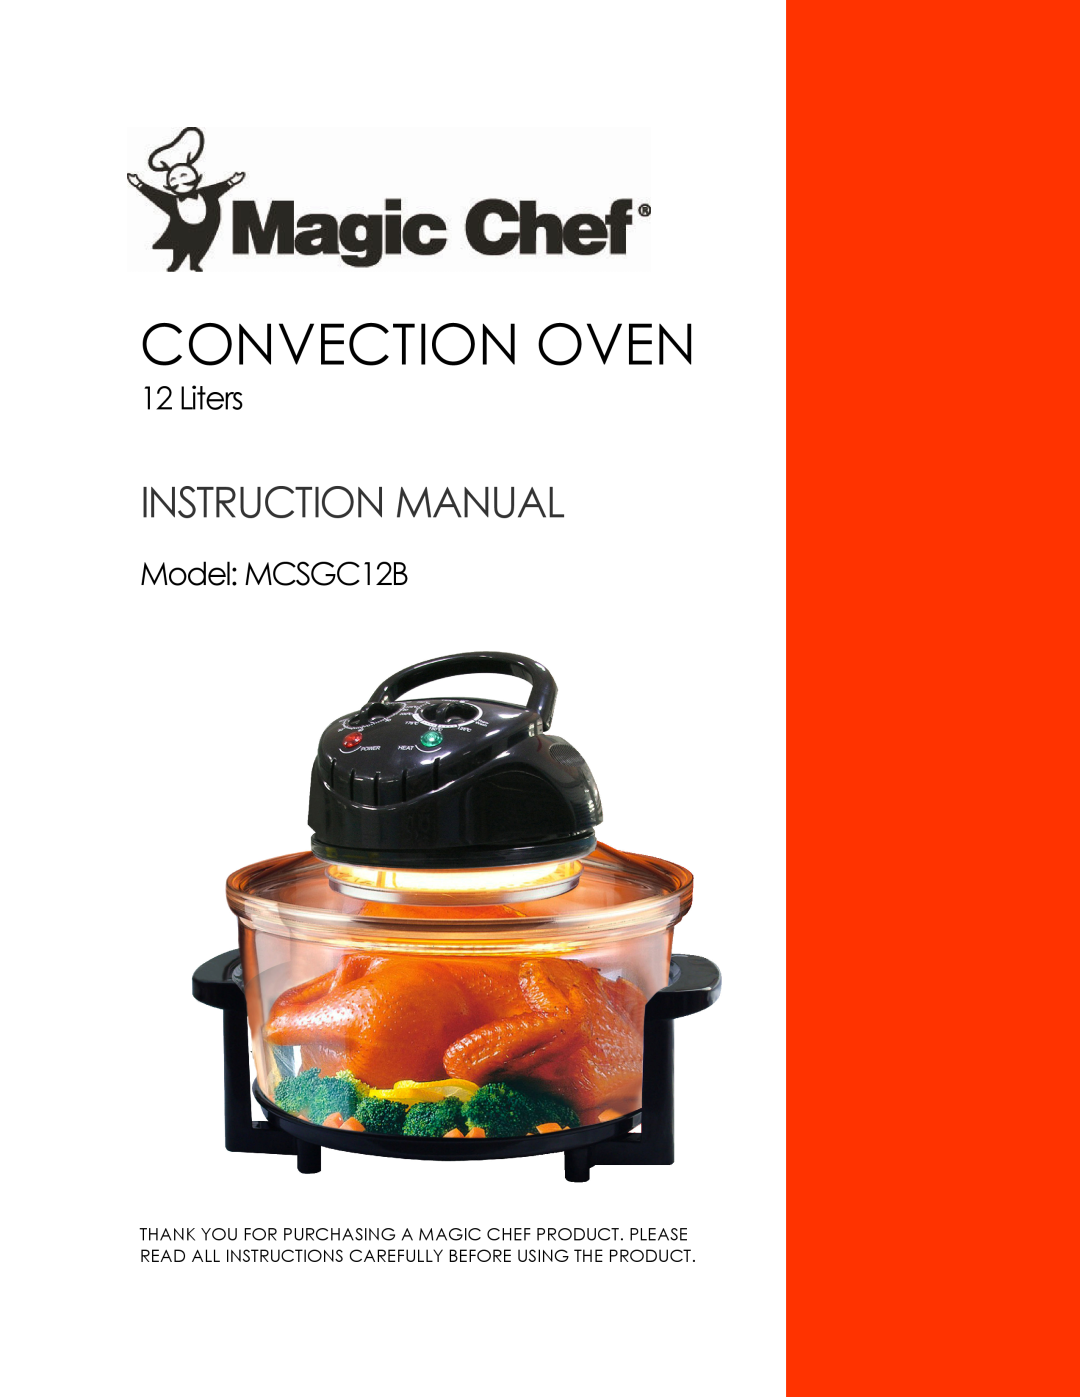 Magic Chef instruction manual Convection Oven, Instruction Manual, MODEL: MCSGC12B, Liters 